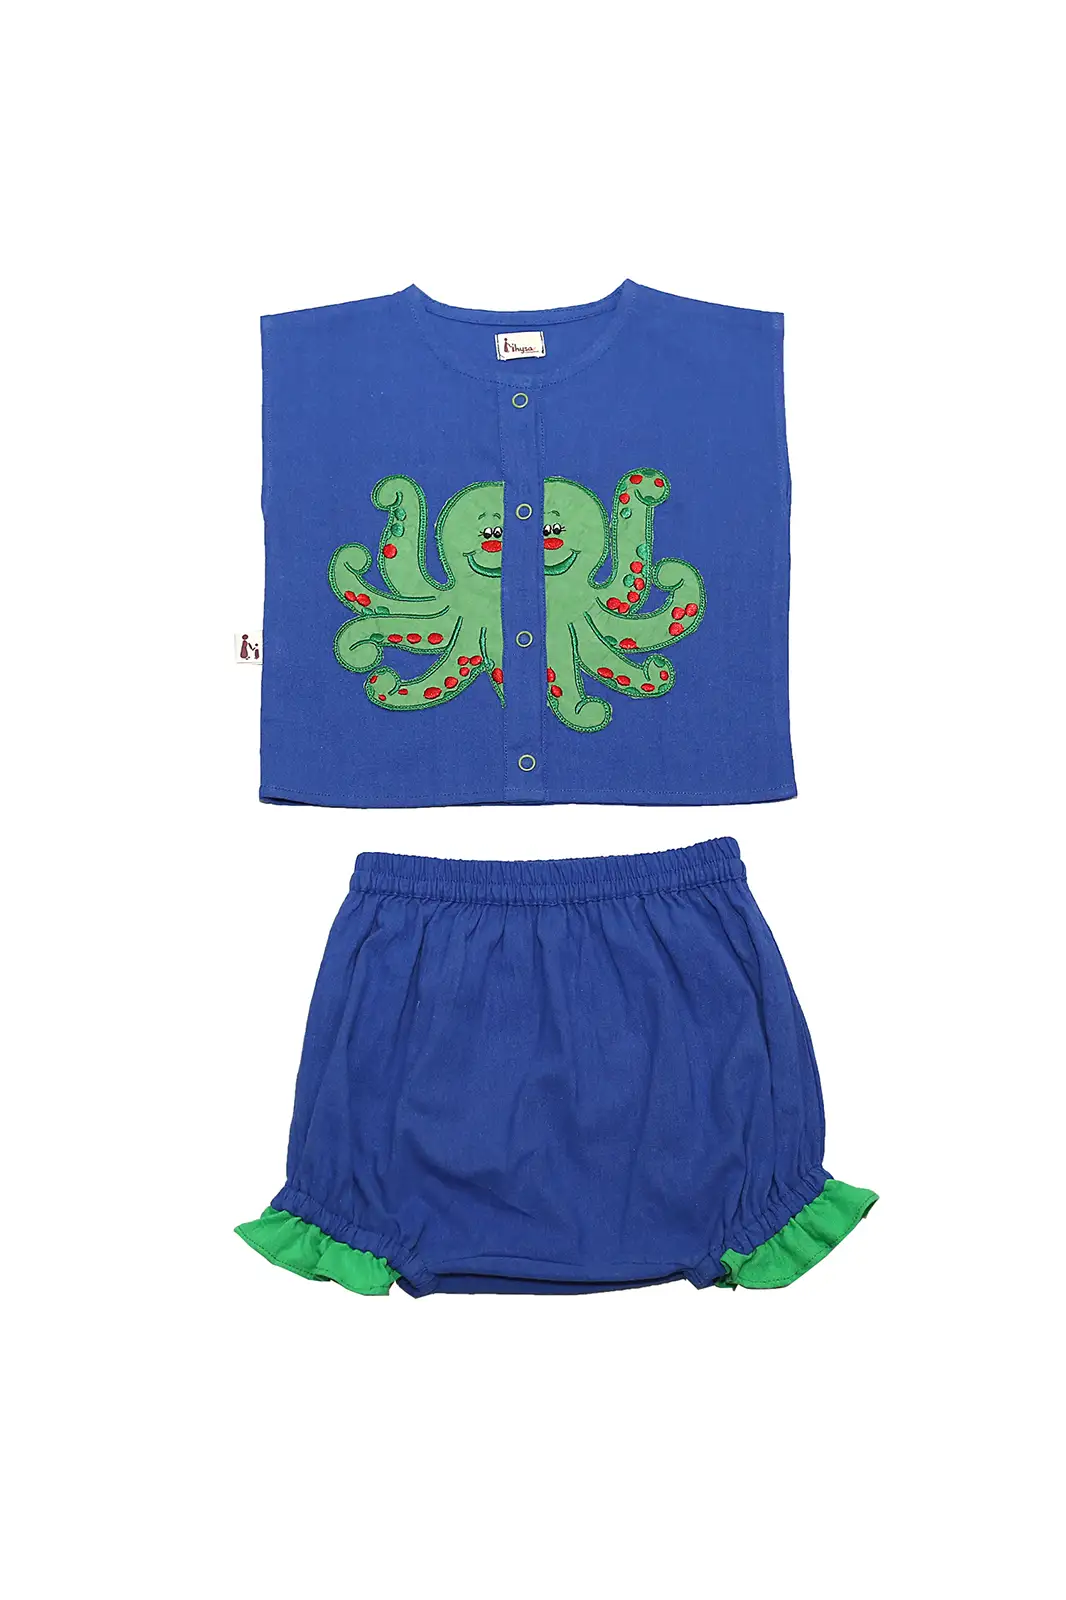 octopus blue set for girl, clothing set, newborn clothing set, summer clothing set, dresses for girls, party wear dress, kids clothing, clothes for girls